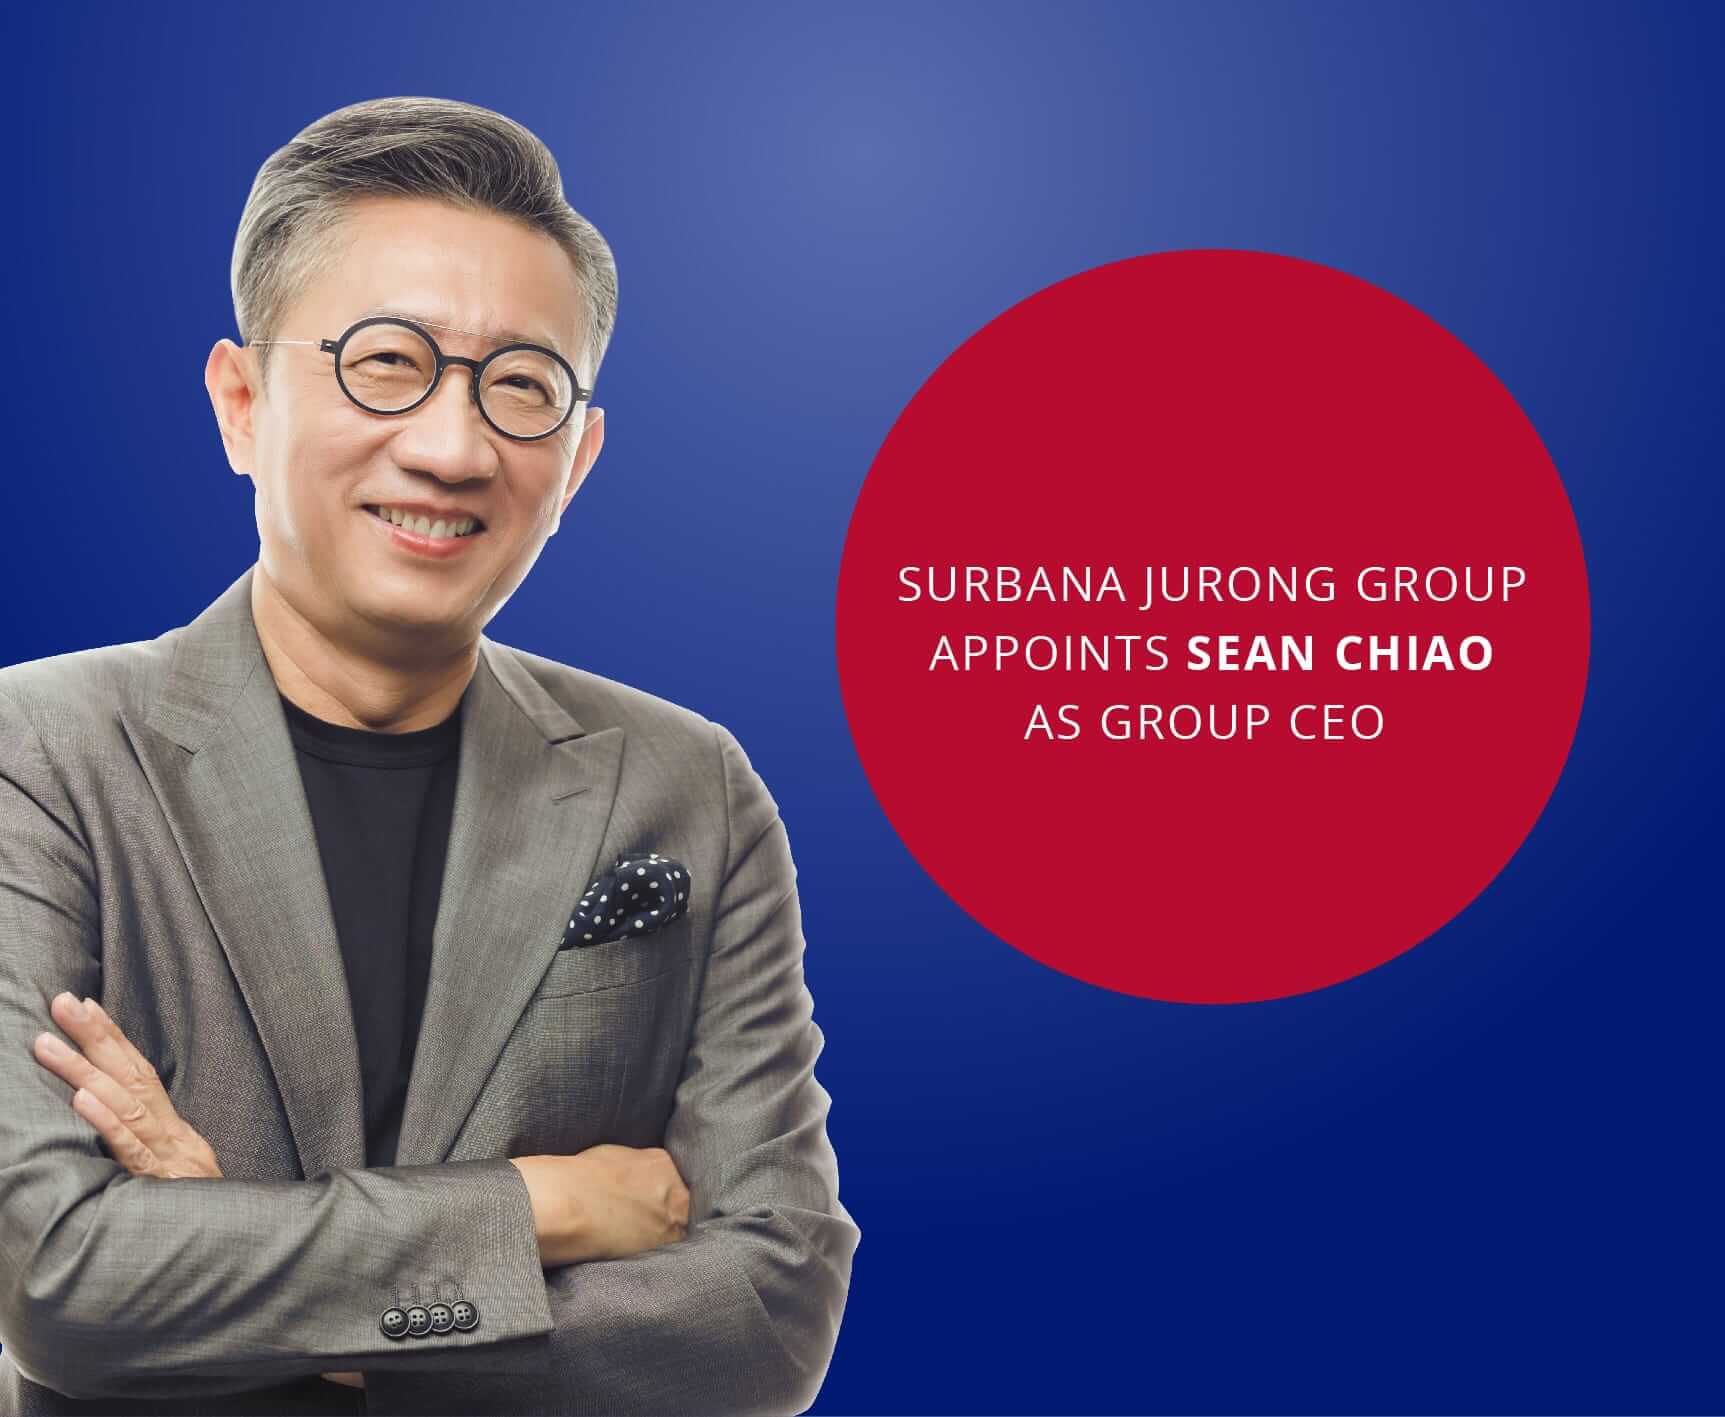 https://surbanajurong.com/resources/news/surbana-jurong-group-appoints-sean-chiao-as-group-ceo/